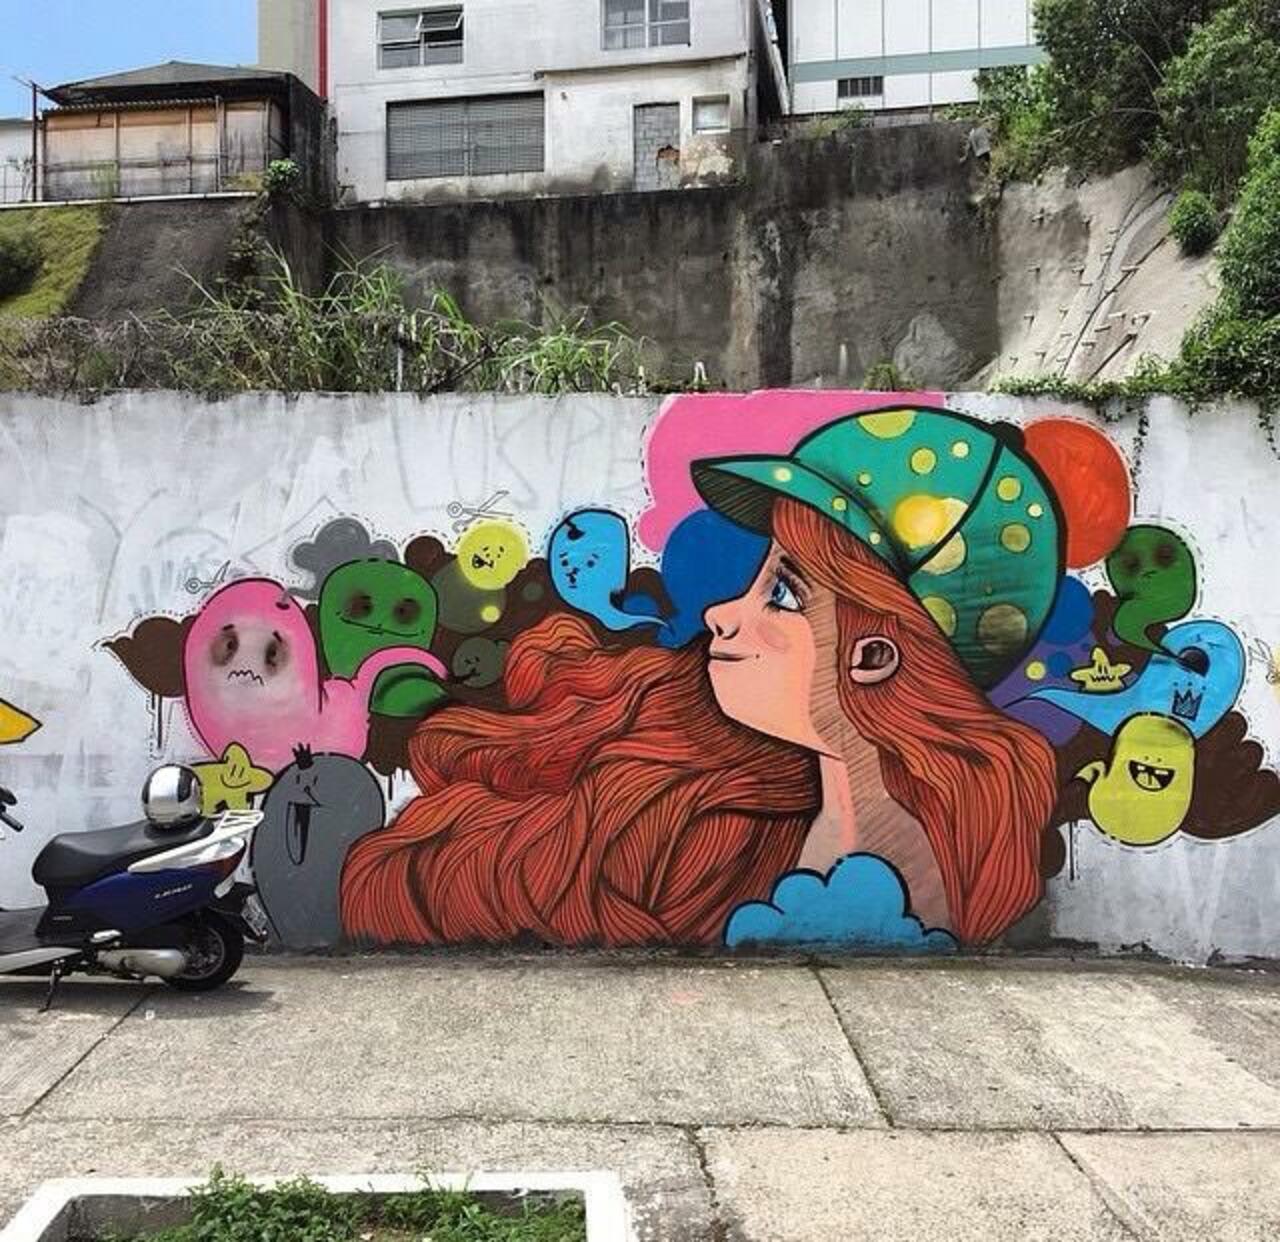 Endearing Street Art by Vupulos in São Paulo, Brazil 

#art #mural #graffiti #streetart http://t.co/R4AW0yLupp